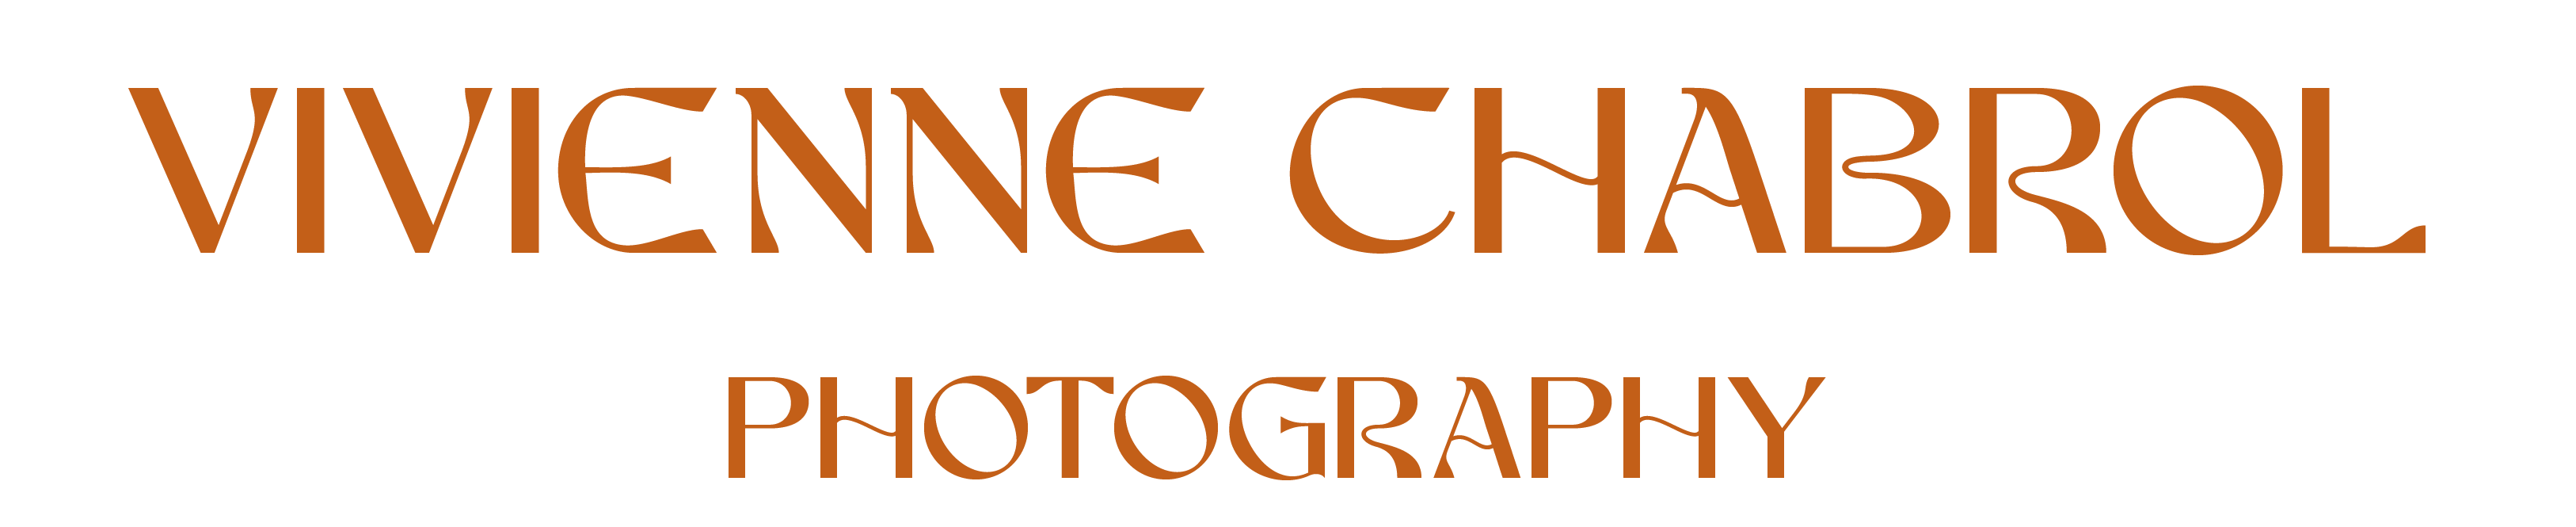 Vivienne Chabrol Photography, Logo